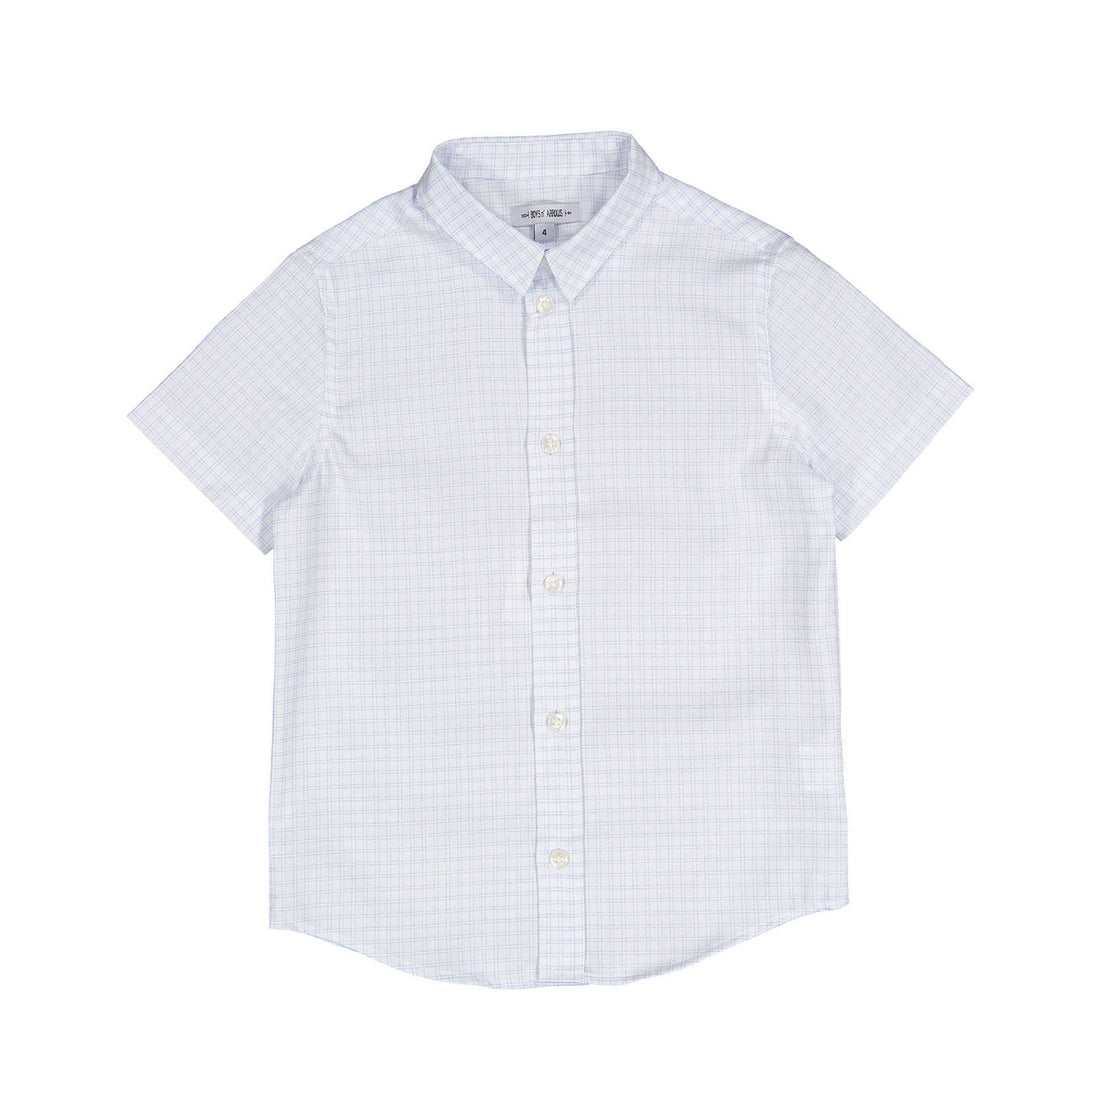 Boys and Arrows White Grid Short Sleeve Shirt